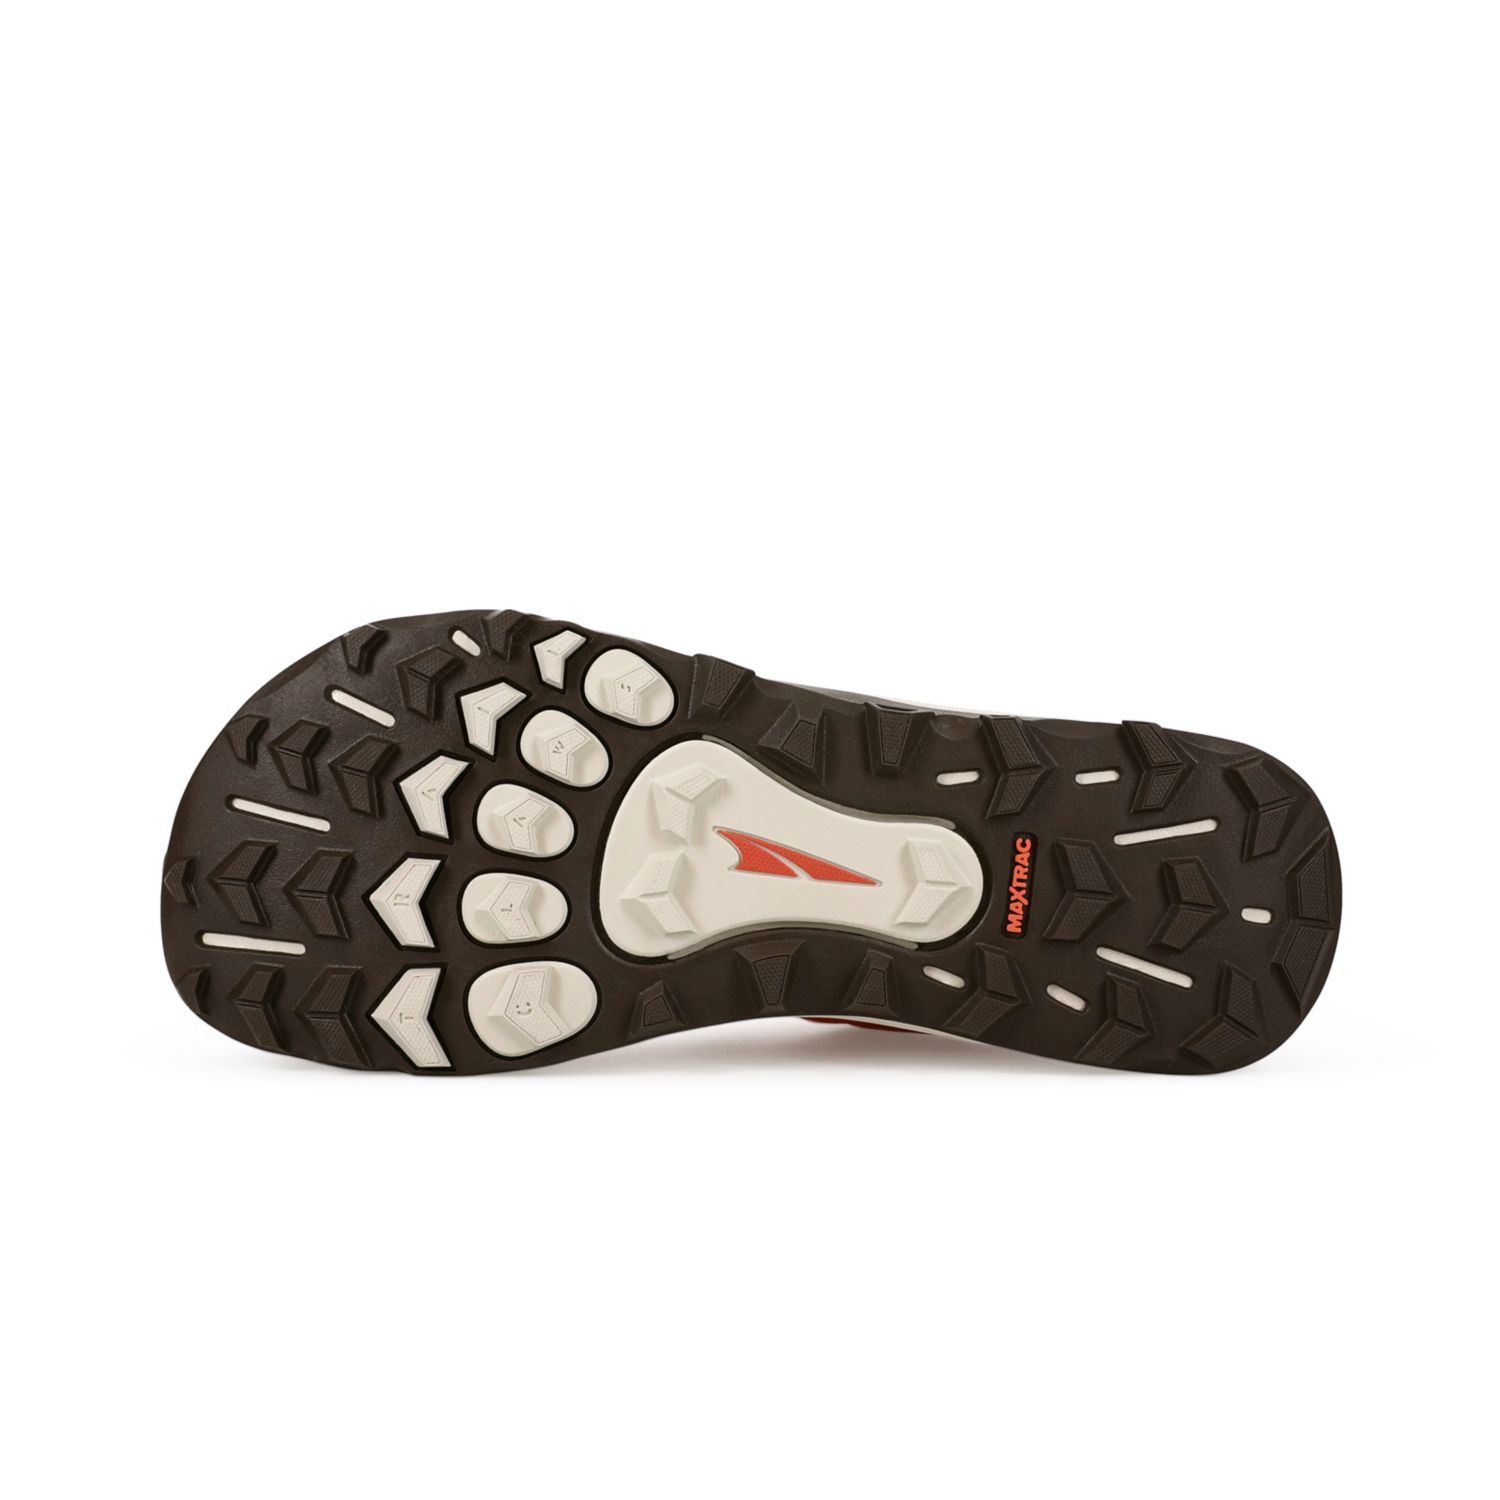 Red / Grey Altra Lone Peak 6 Women's Trail Running Shoes | Ireland-41978529